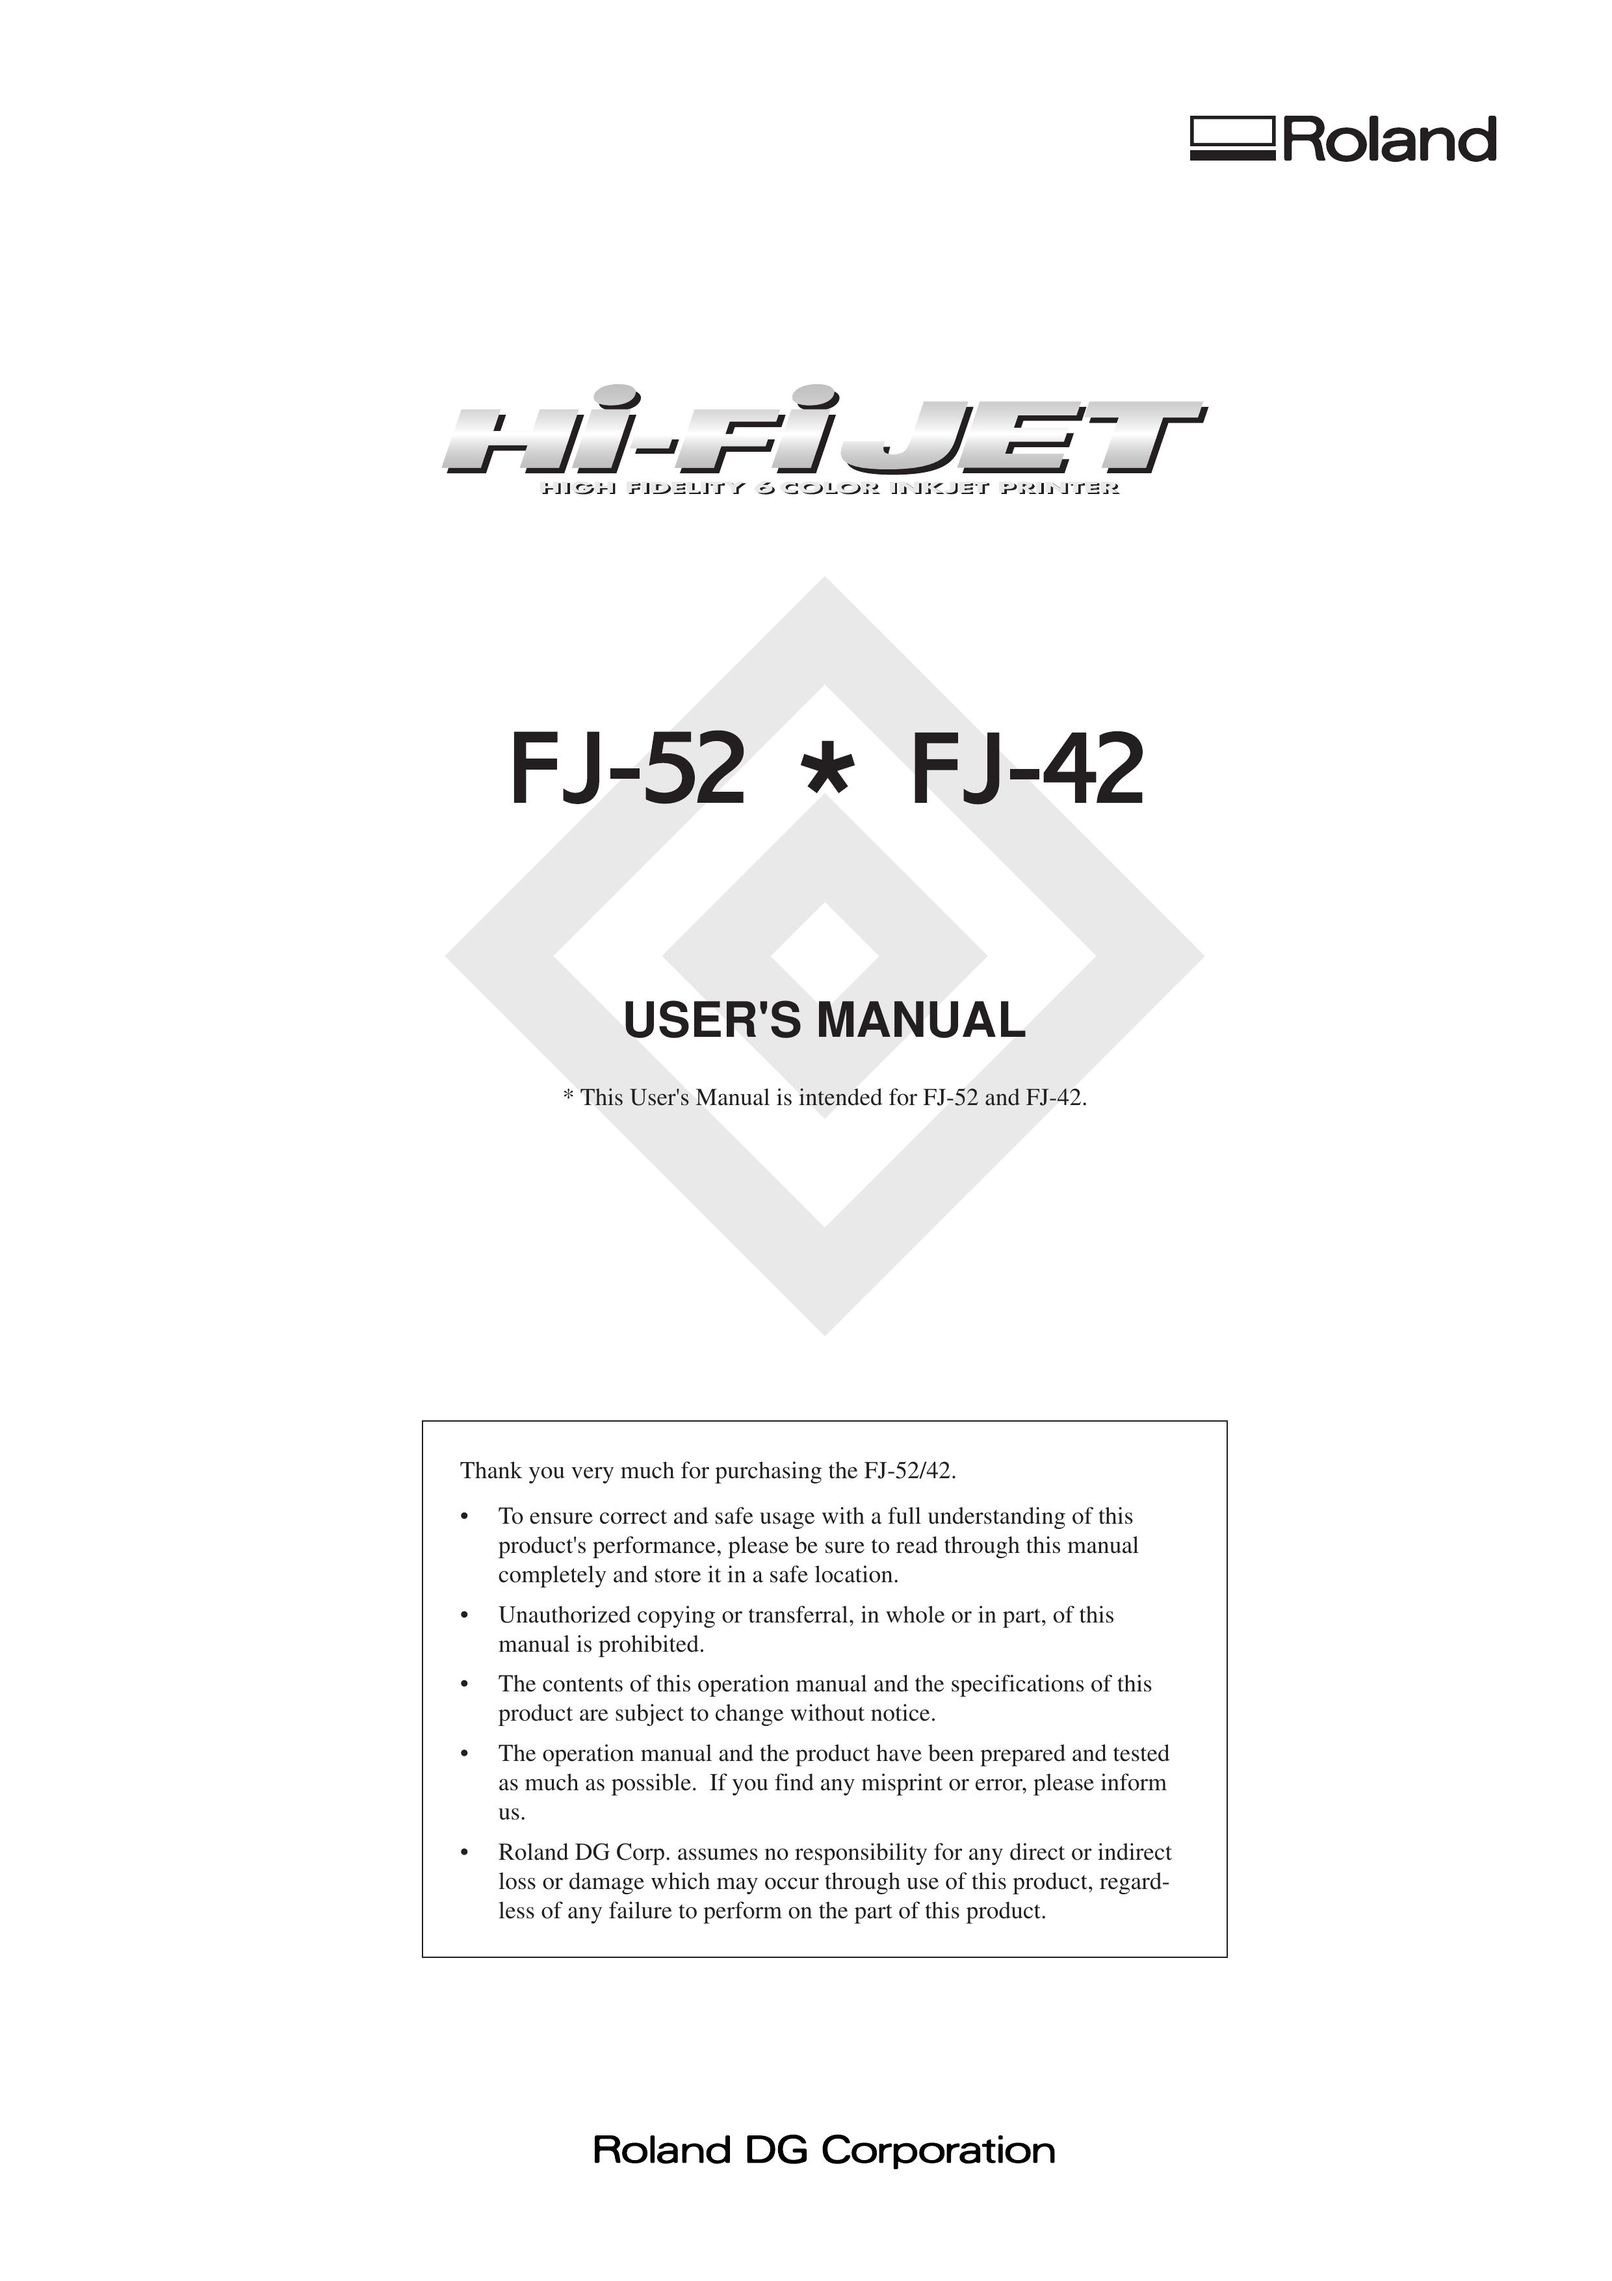 Roland FJ-42 Printer User Manual